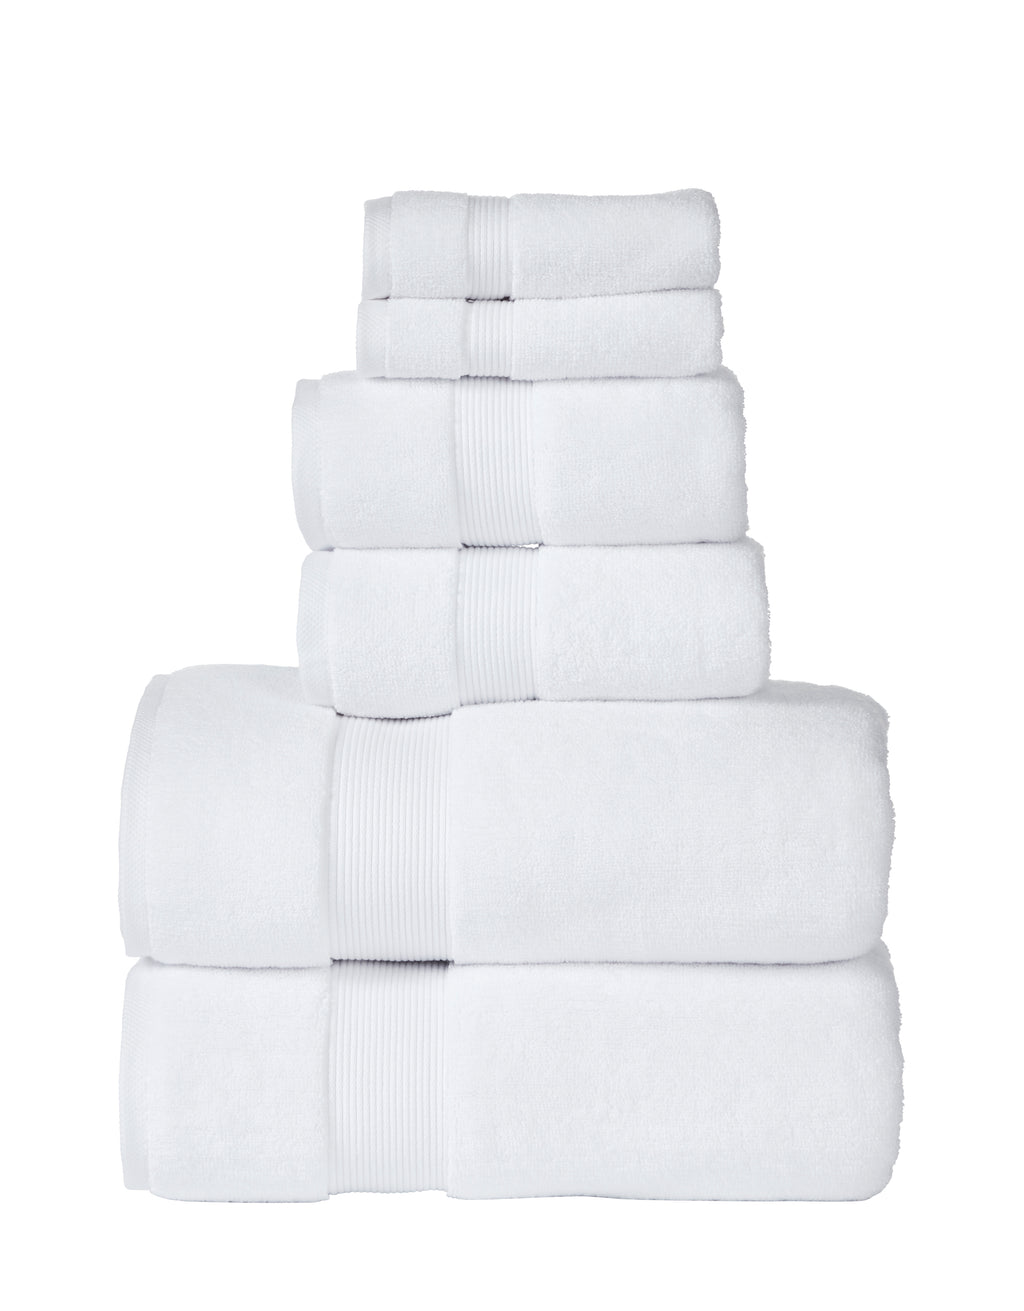 703 GSM 6 Piece Towels Set - White